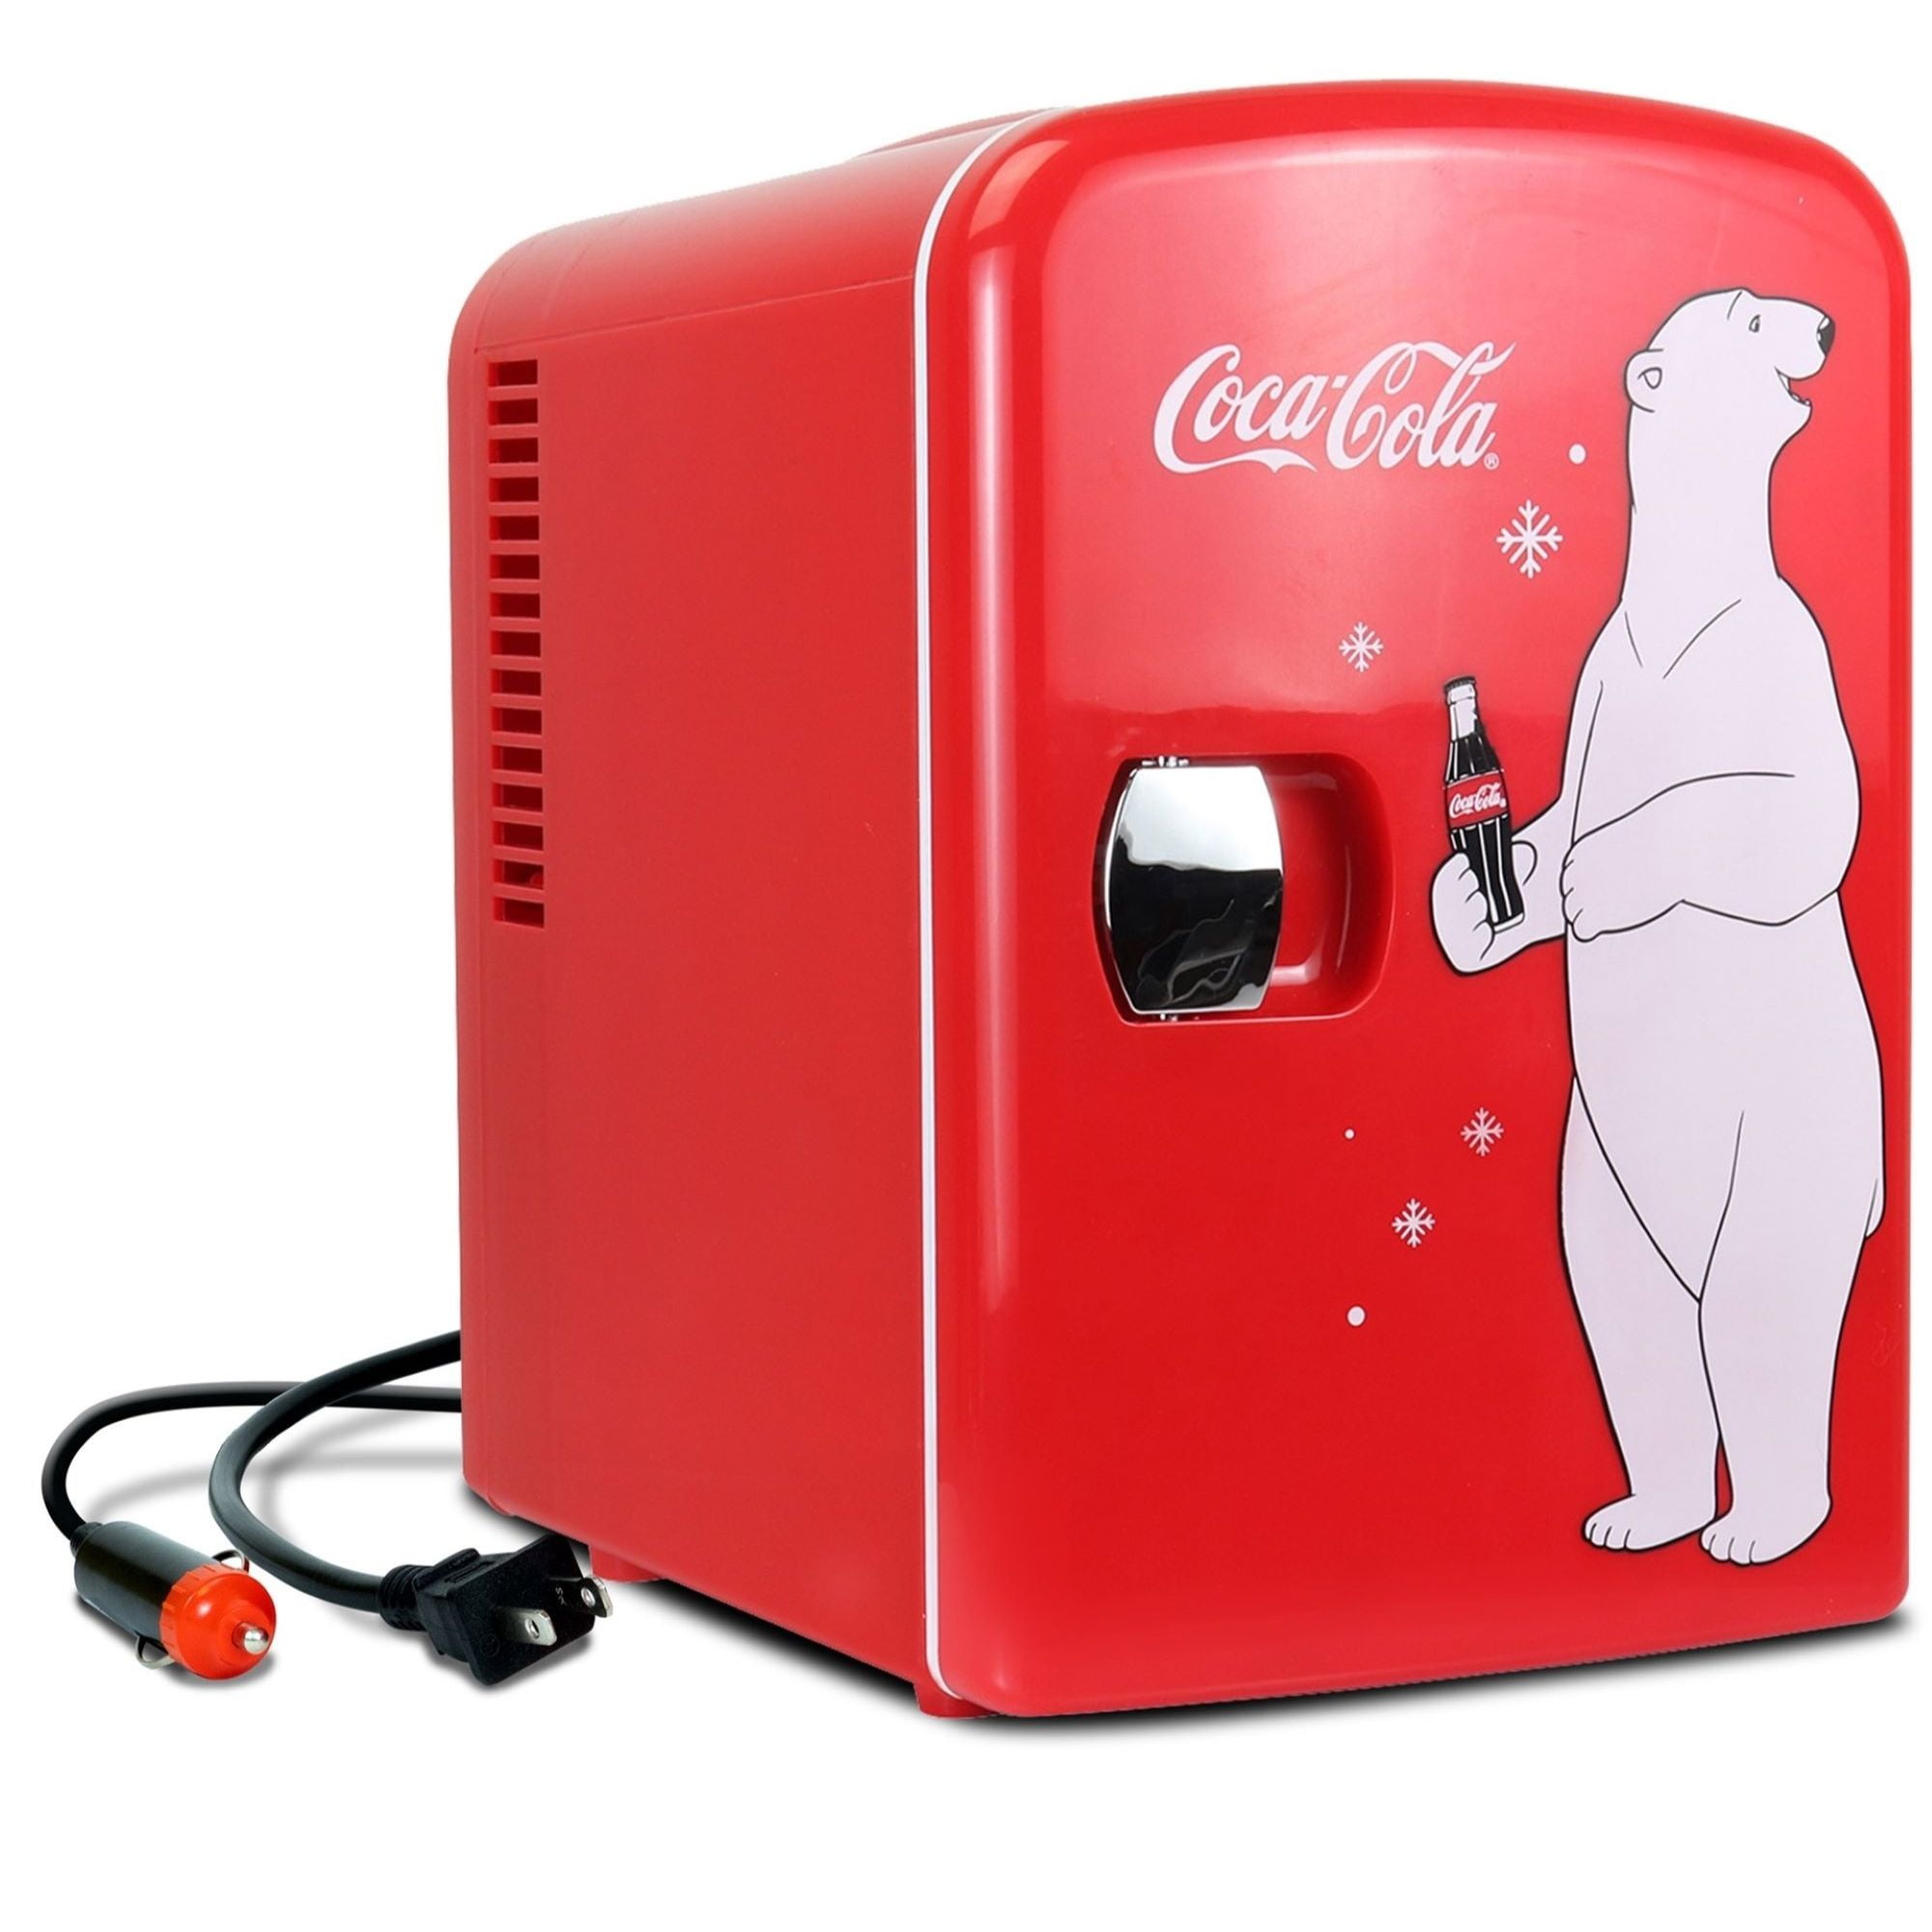 Coca Cola Classic Thermoelectric Cooler